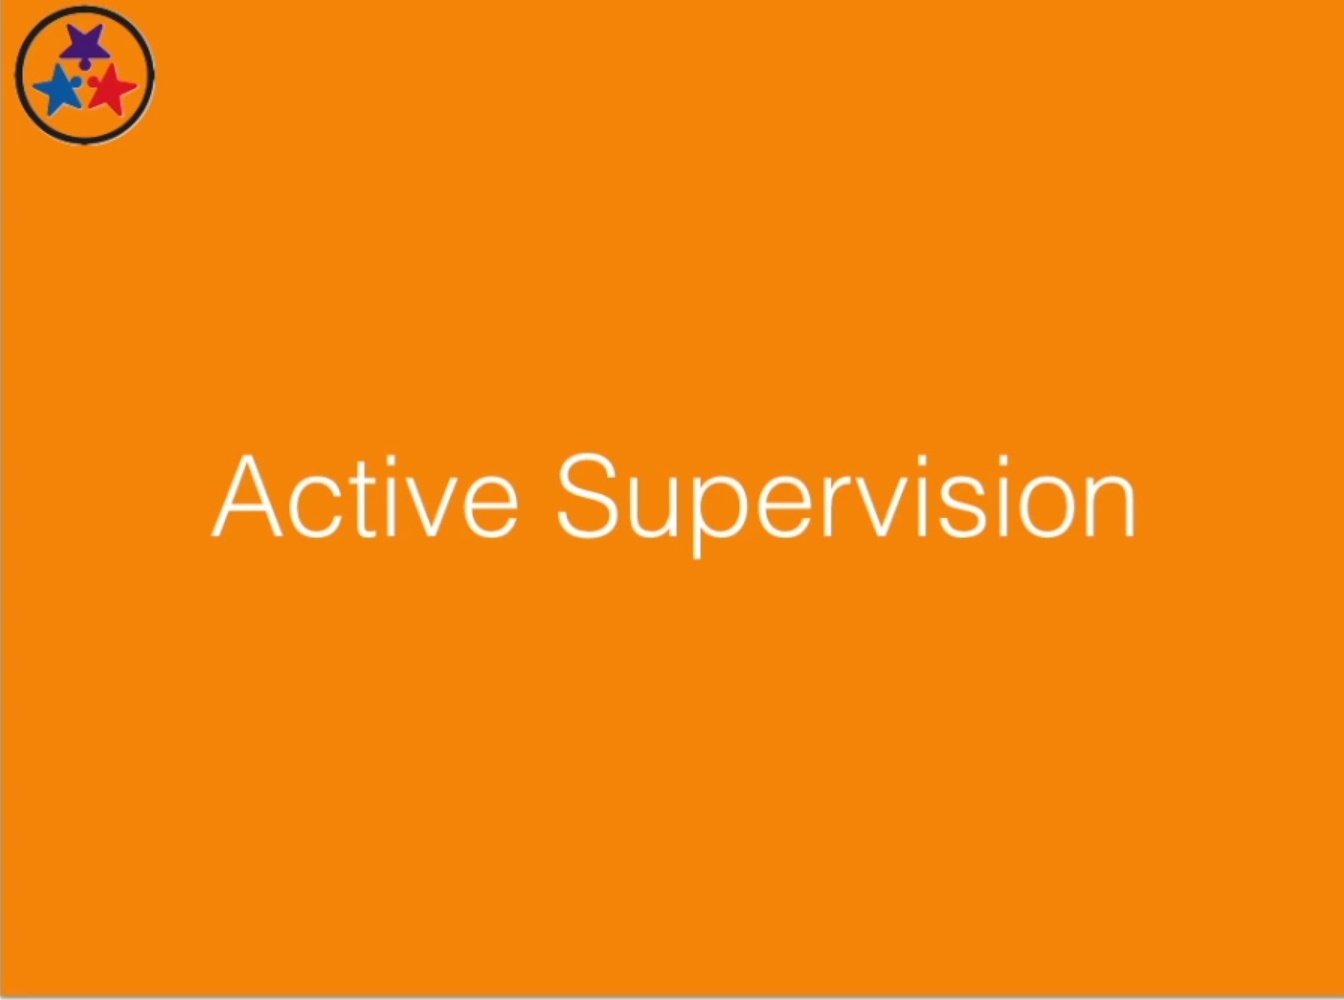 Classroom Management 6 - Active Supervision